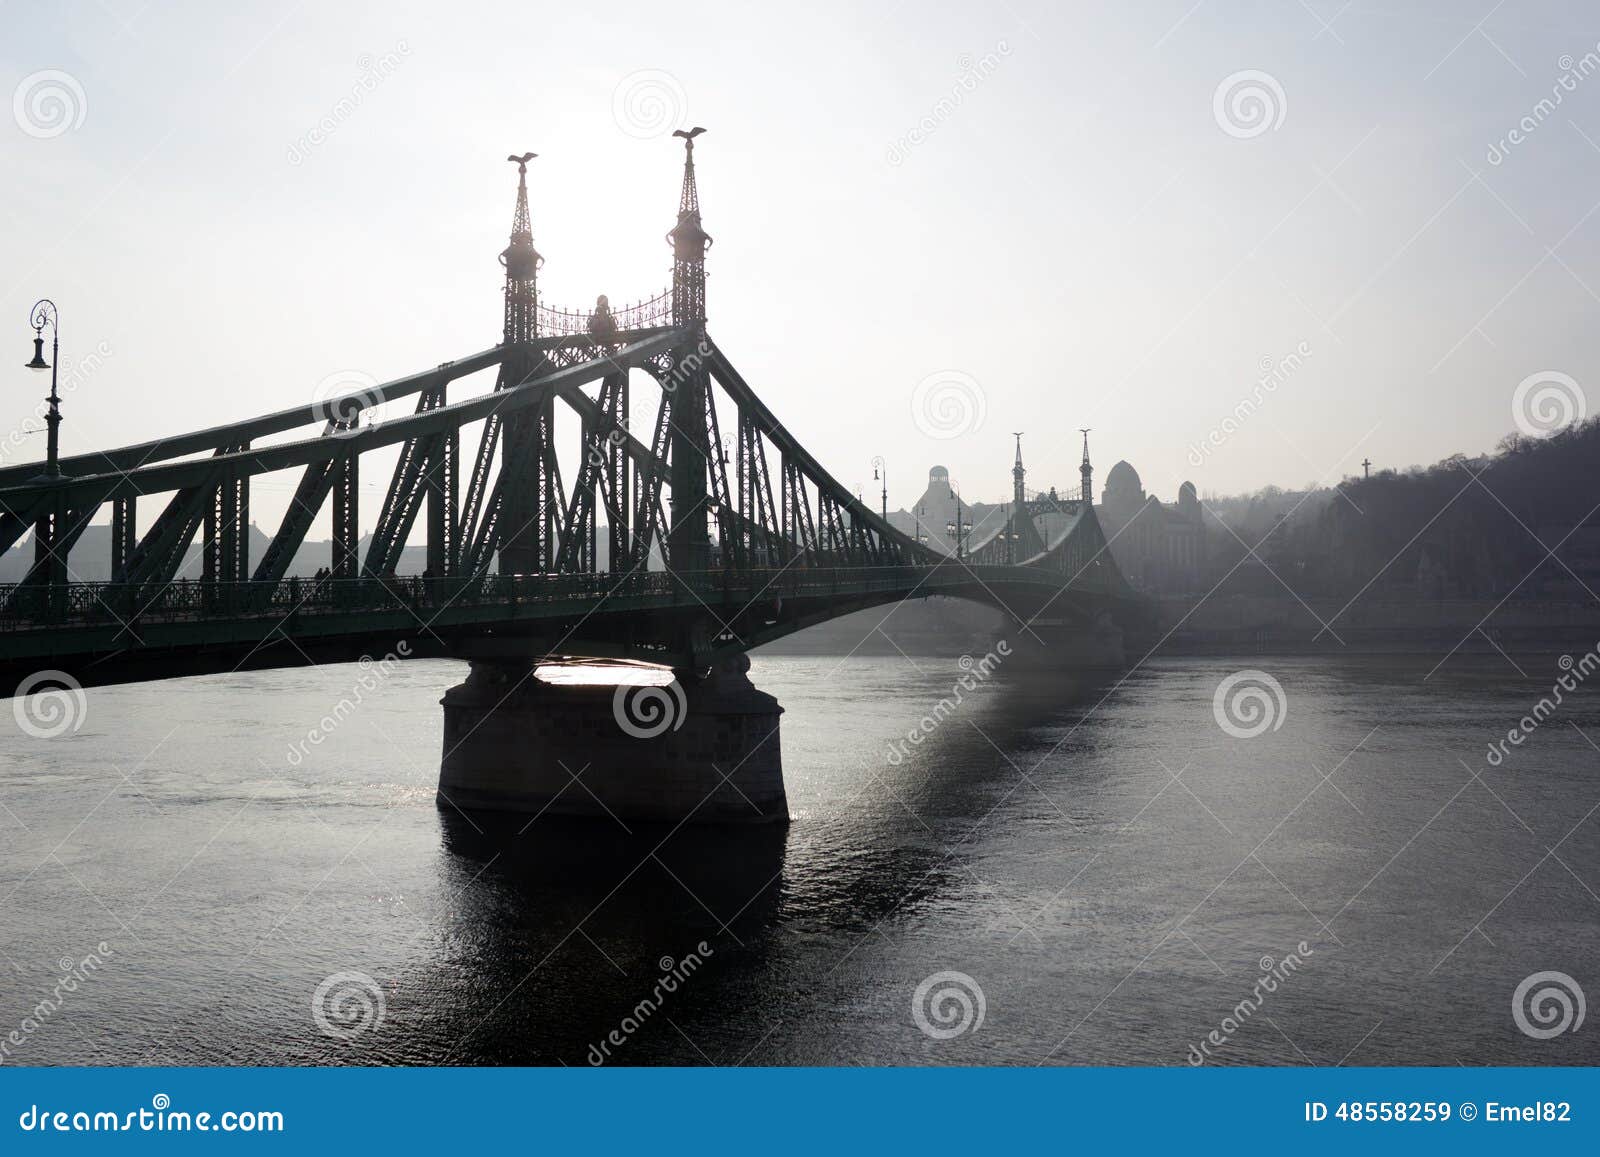 liberty bridge, budapest